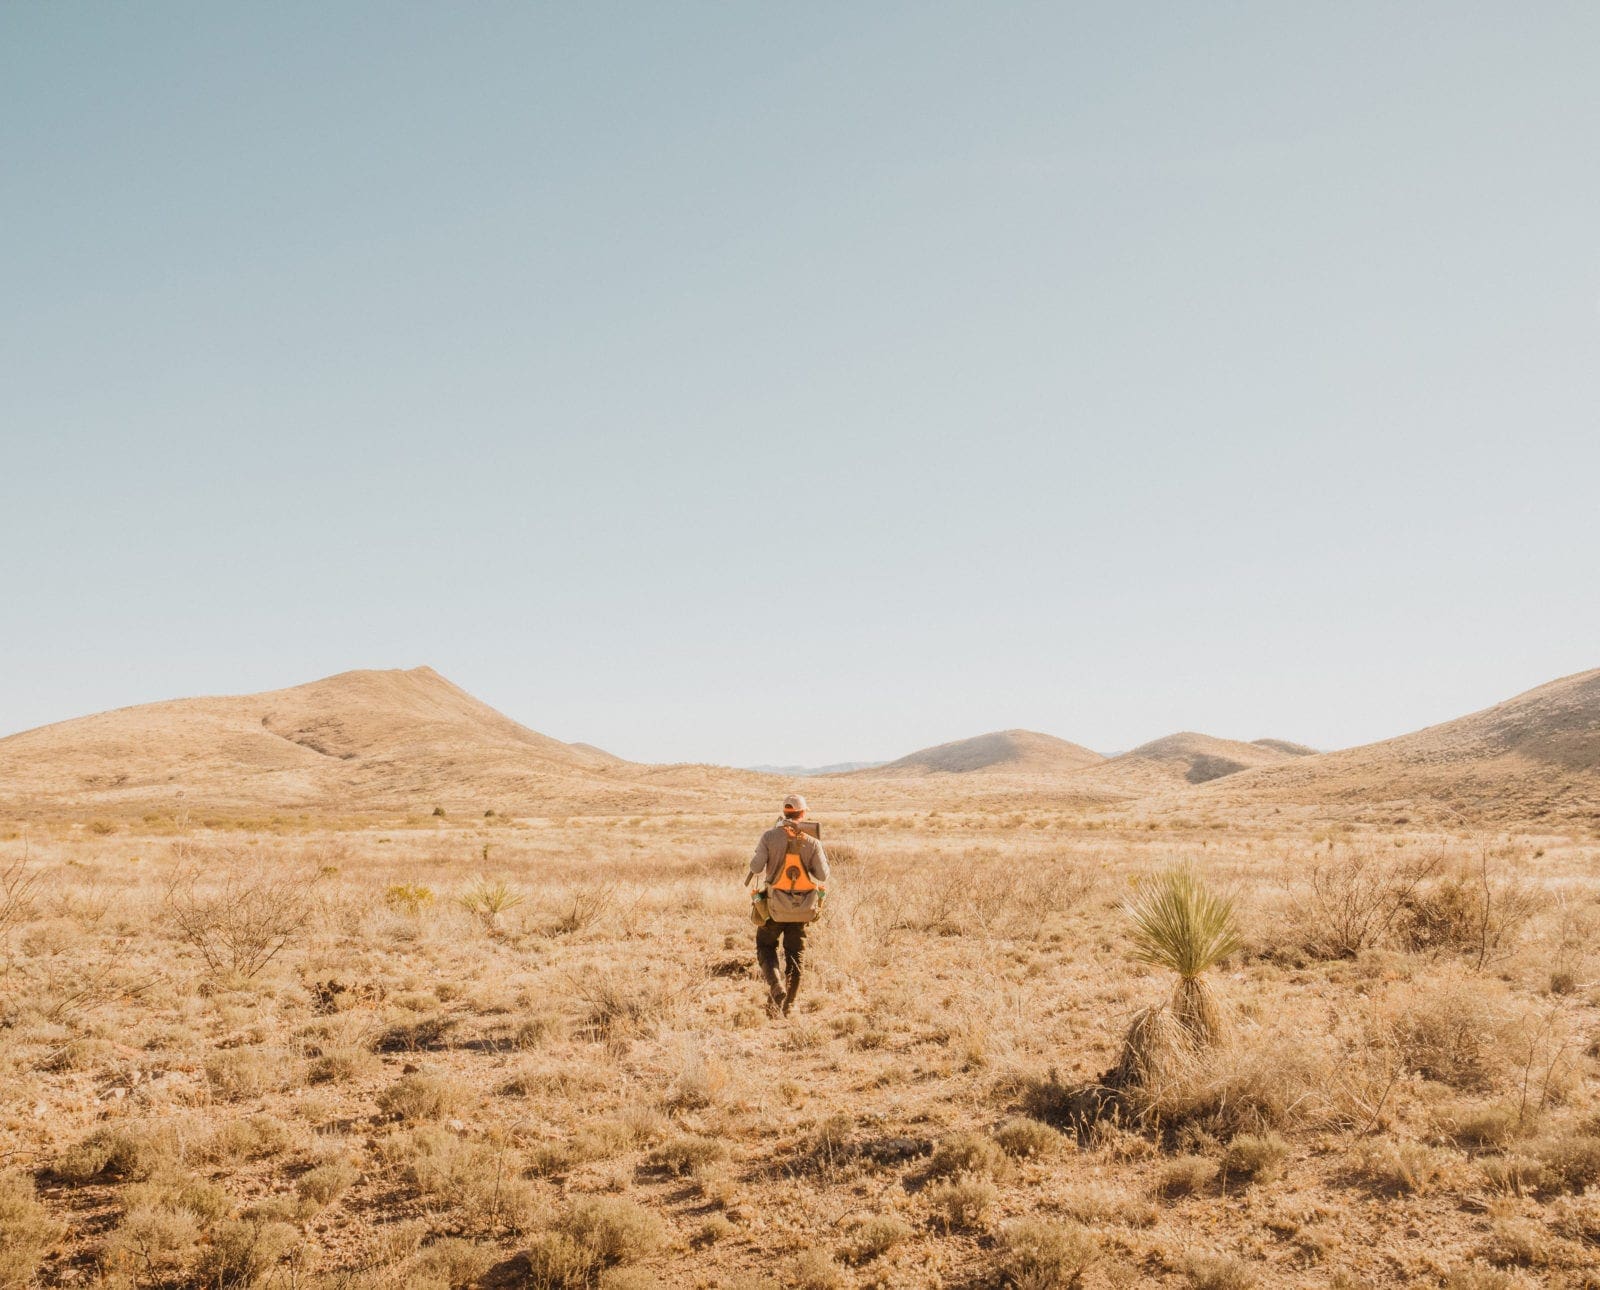 A hunter walks through the Arizonan landscape in search of birds.